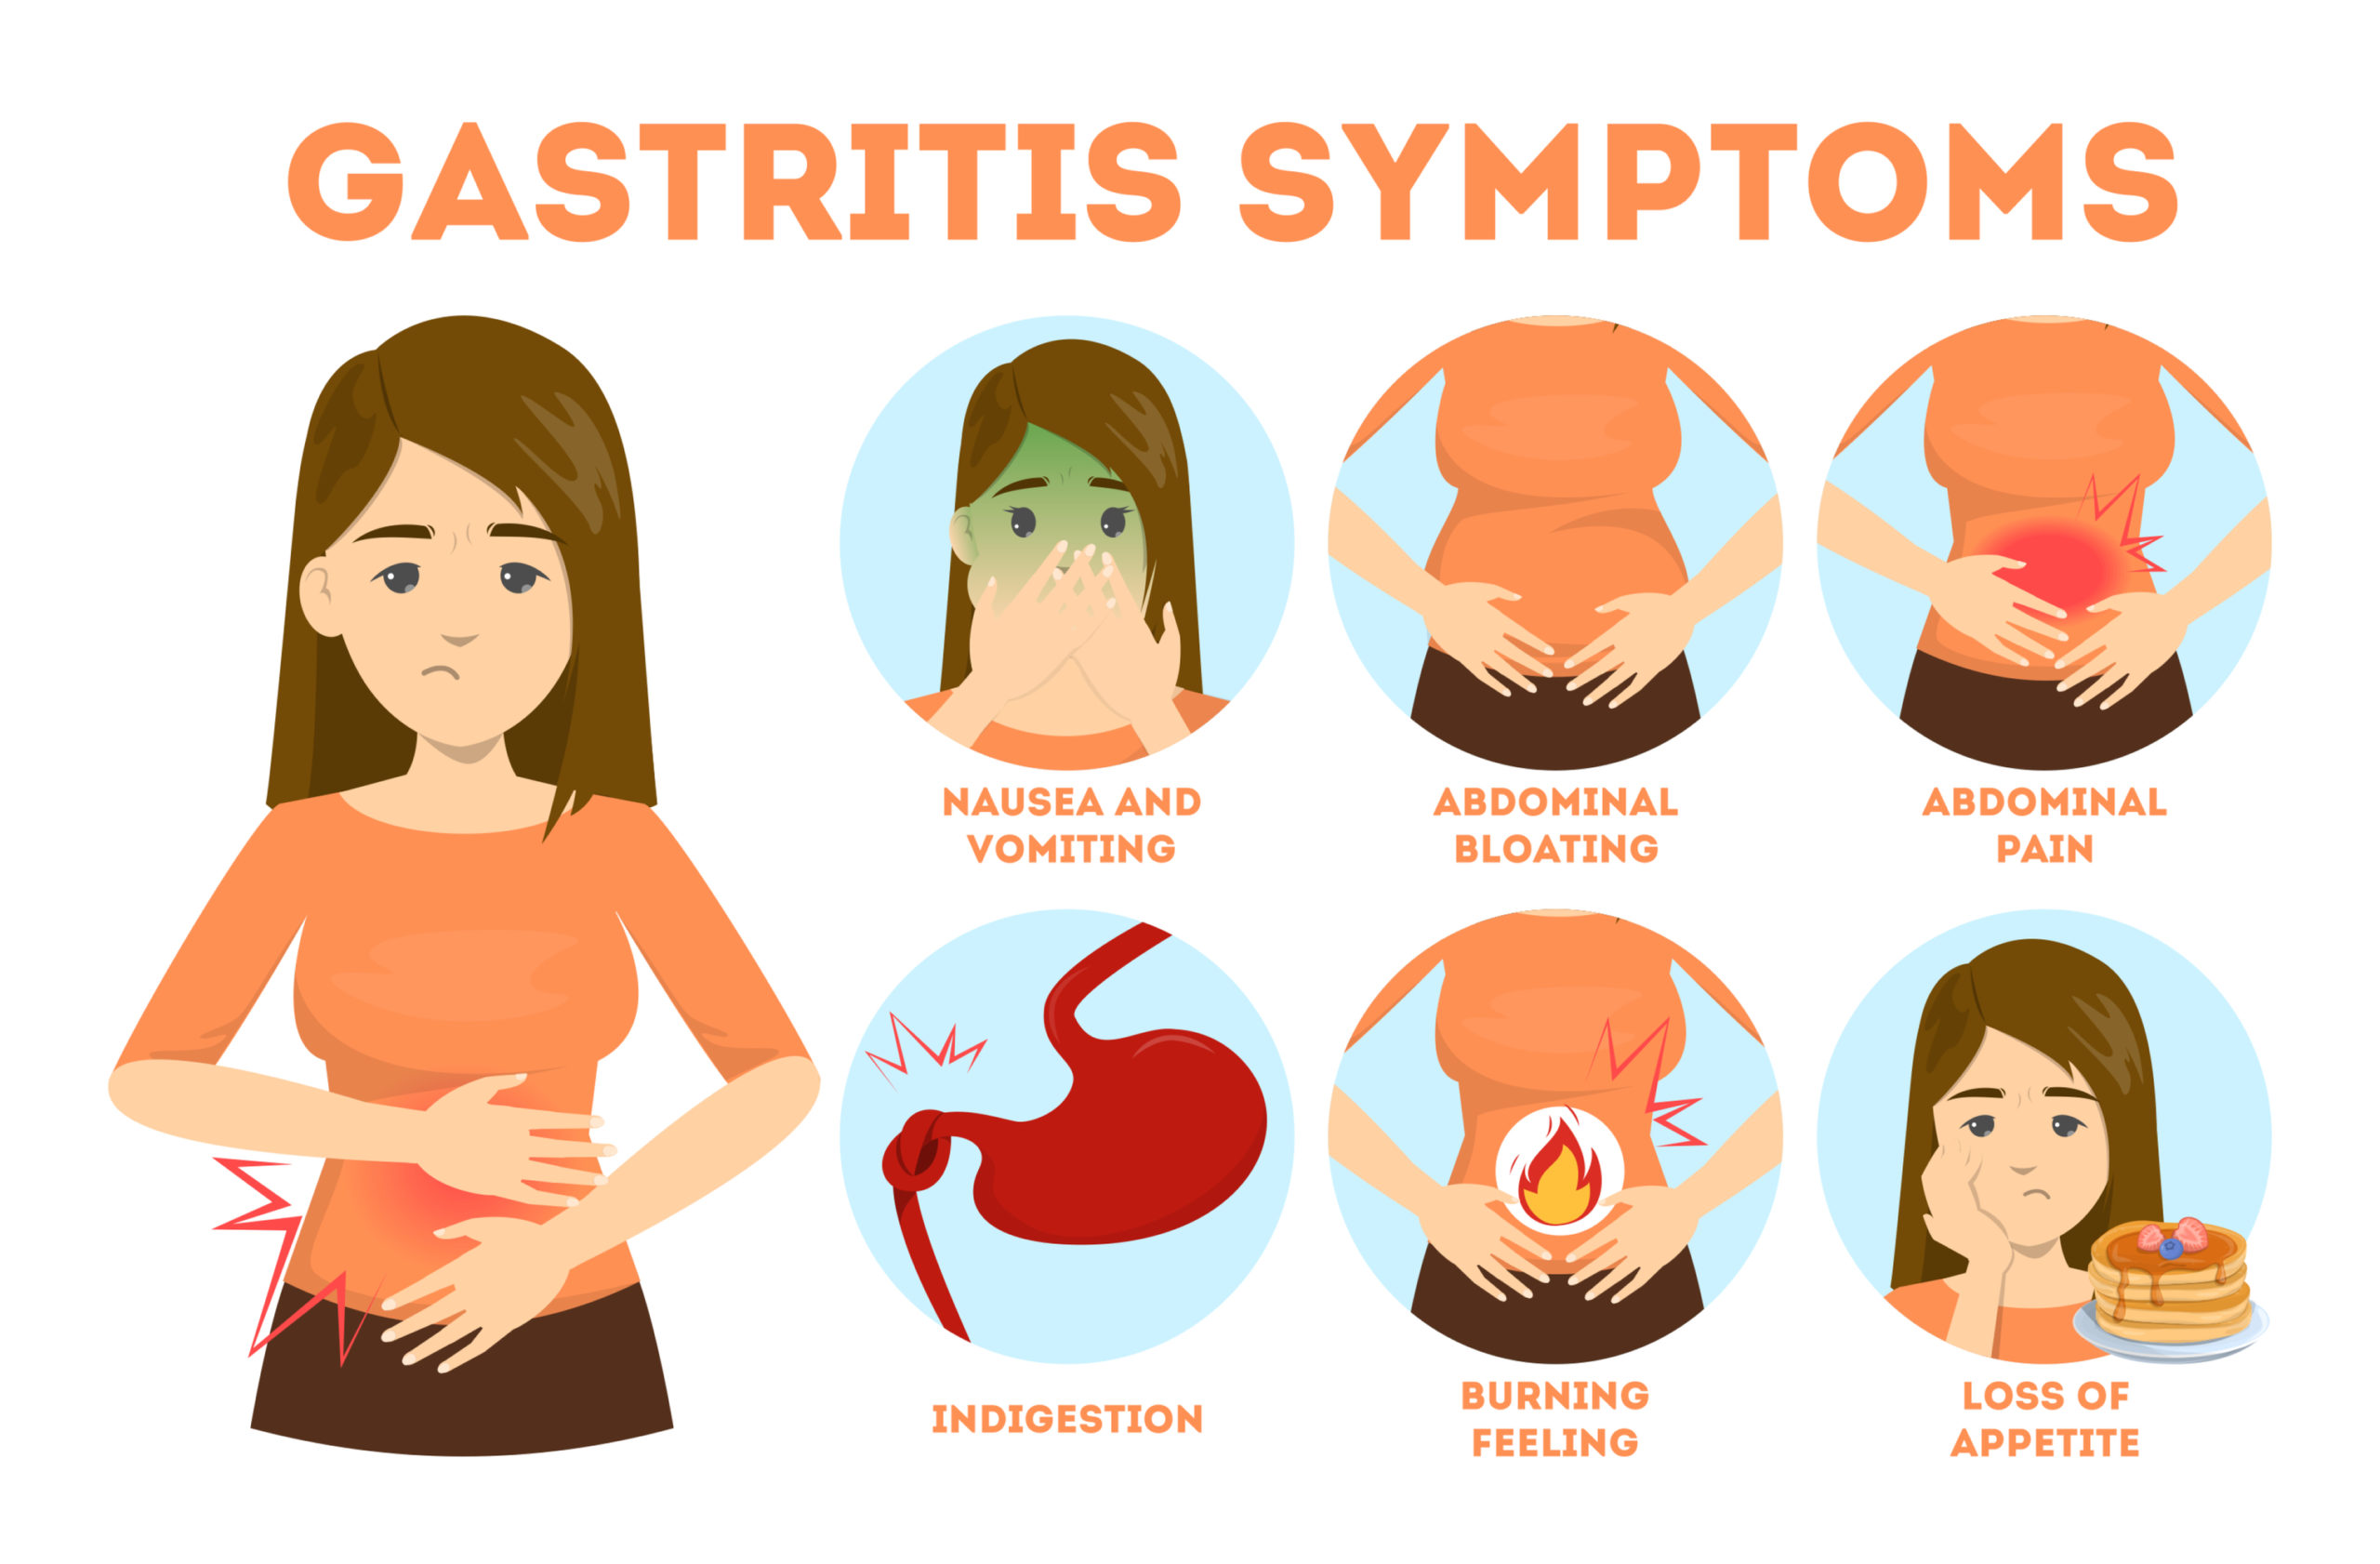 Symptoms of gastritis